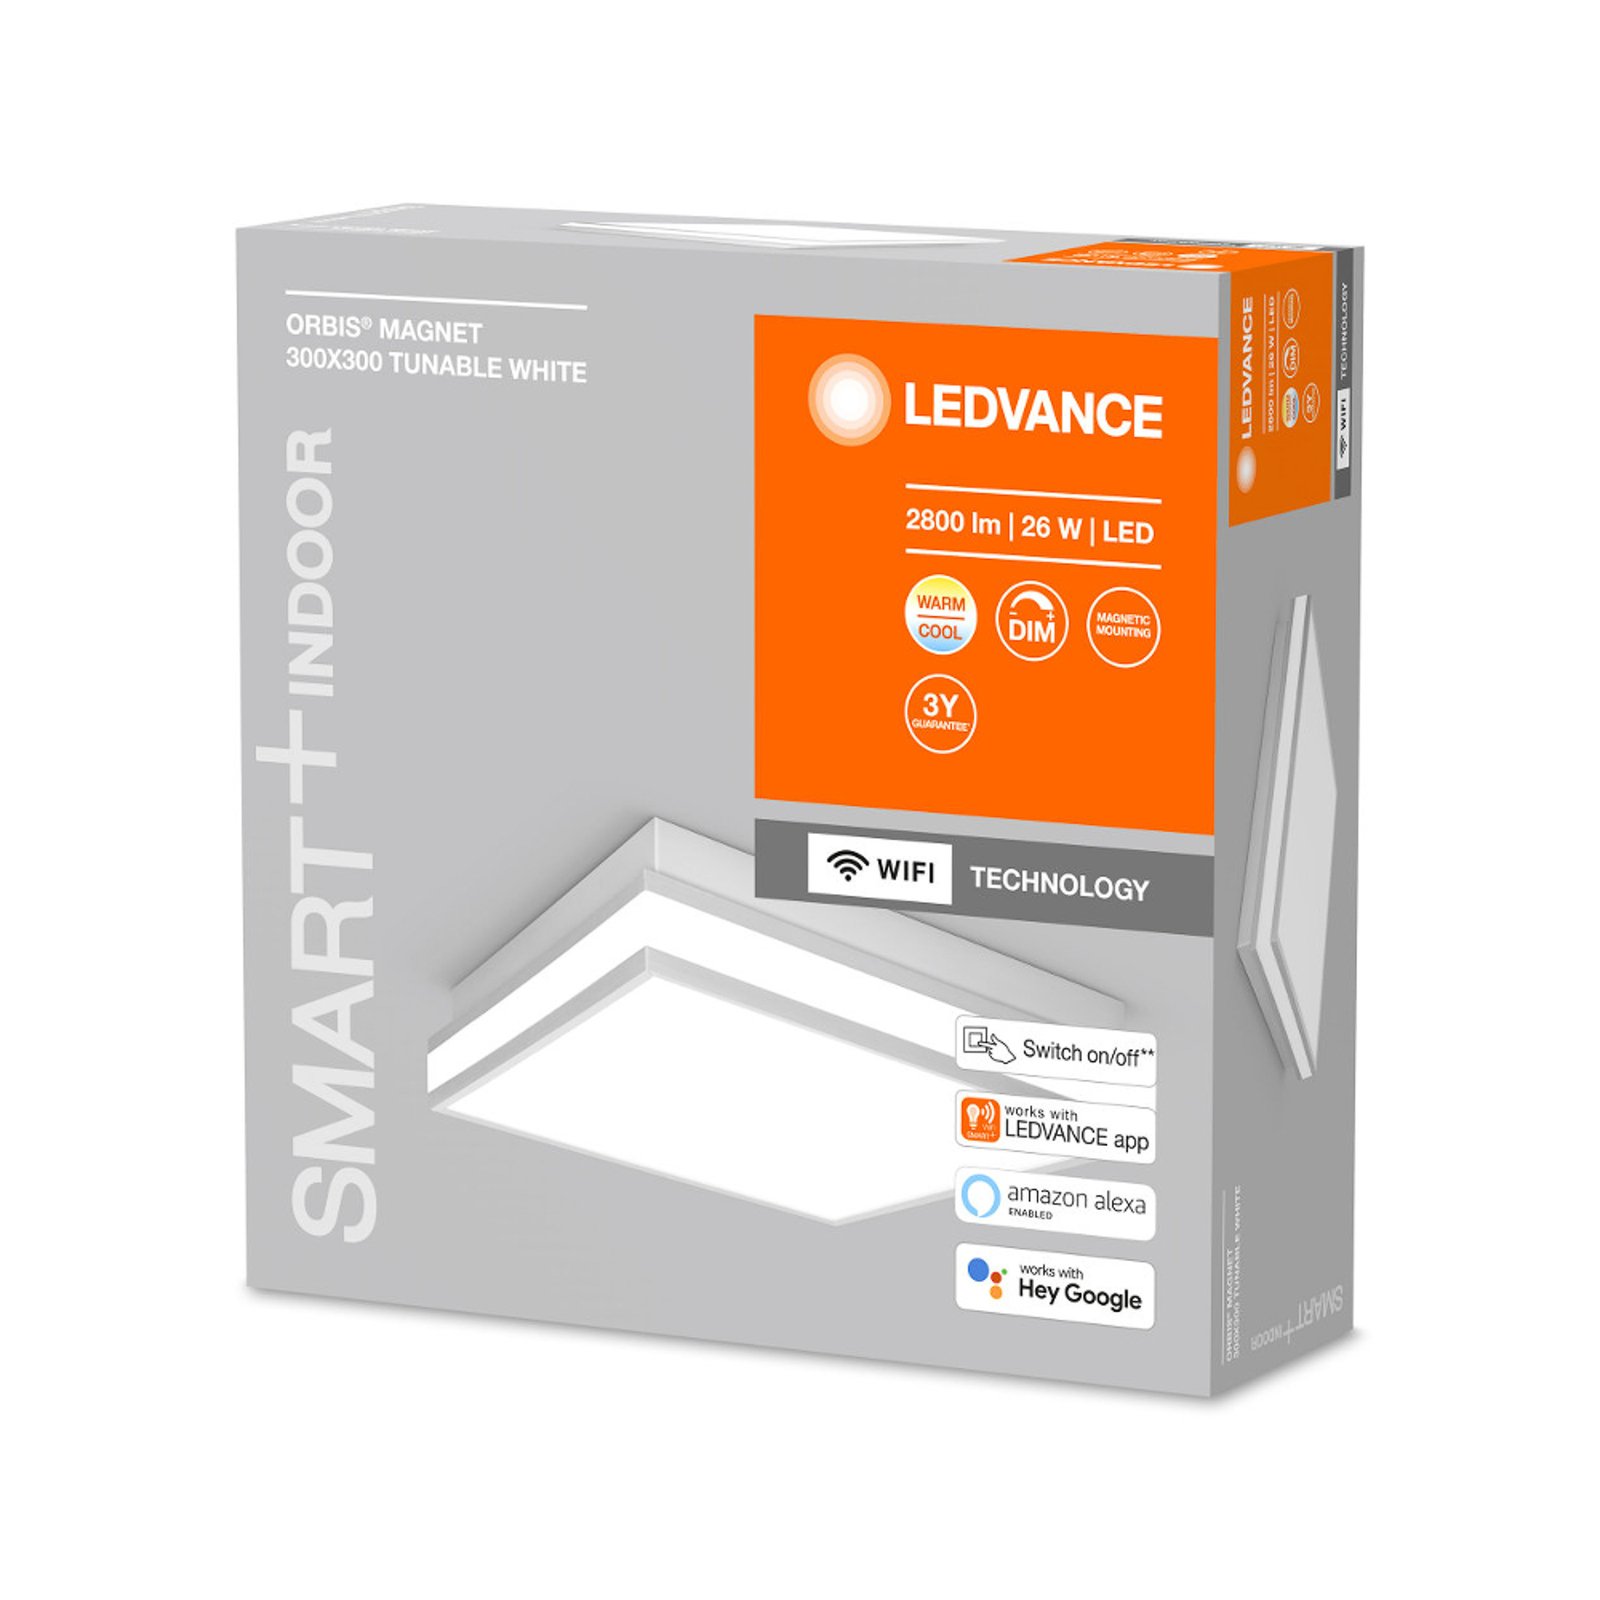 LEDVANCE SMART+ WiFi Orbis Magnet grau, 30x30cm